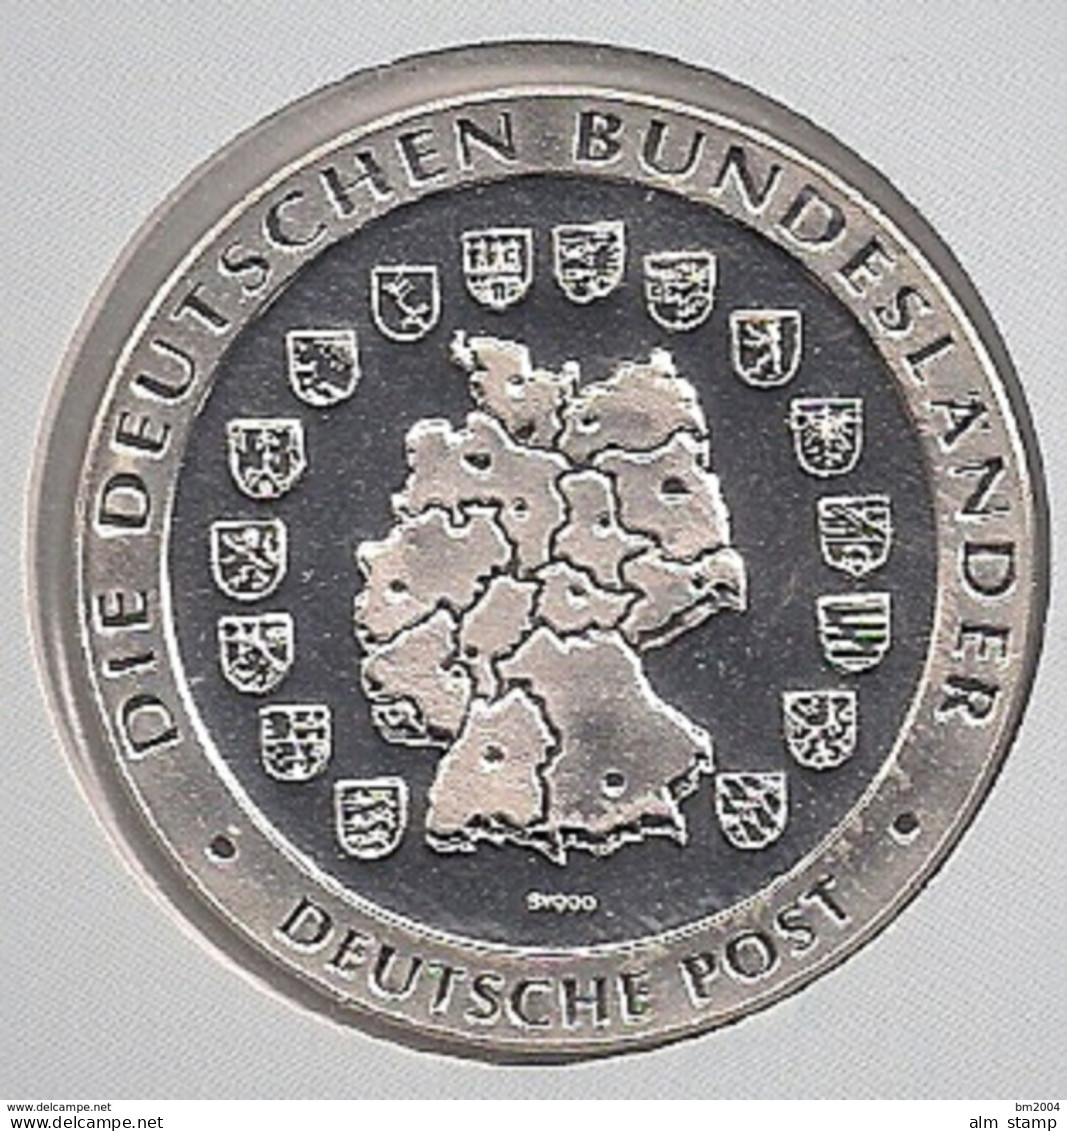 999/1000 Silber Medaille " Thüringen    " PP   36 Mm DMR Rohgewicht : 14 G Prägung : Hochrelief - Monedas Elongadas (elongated Coins)